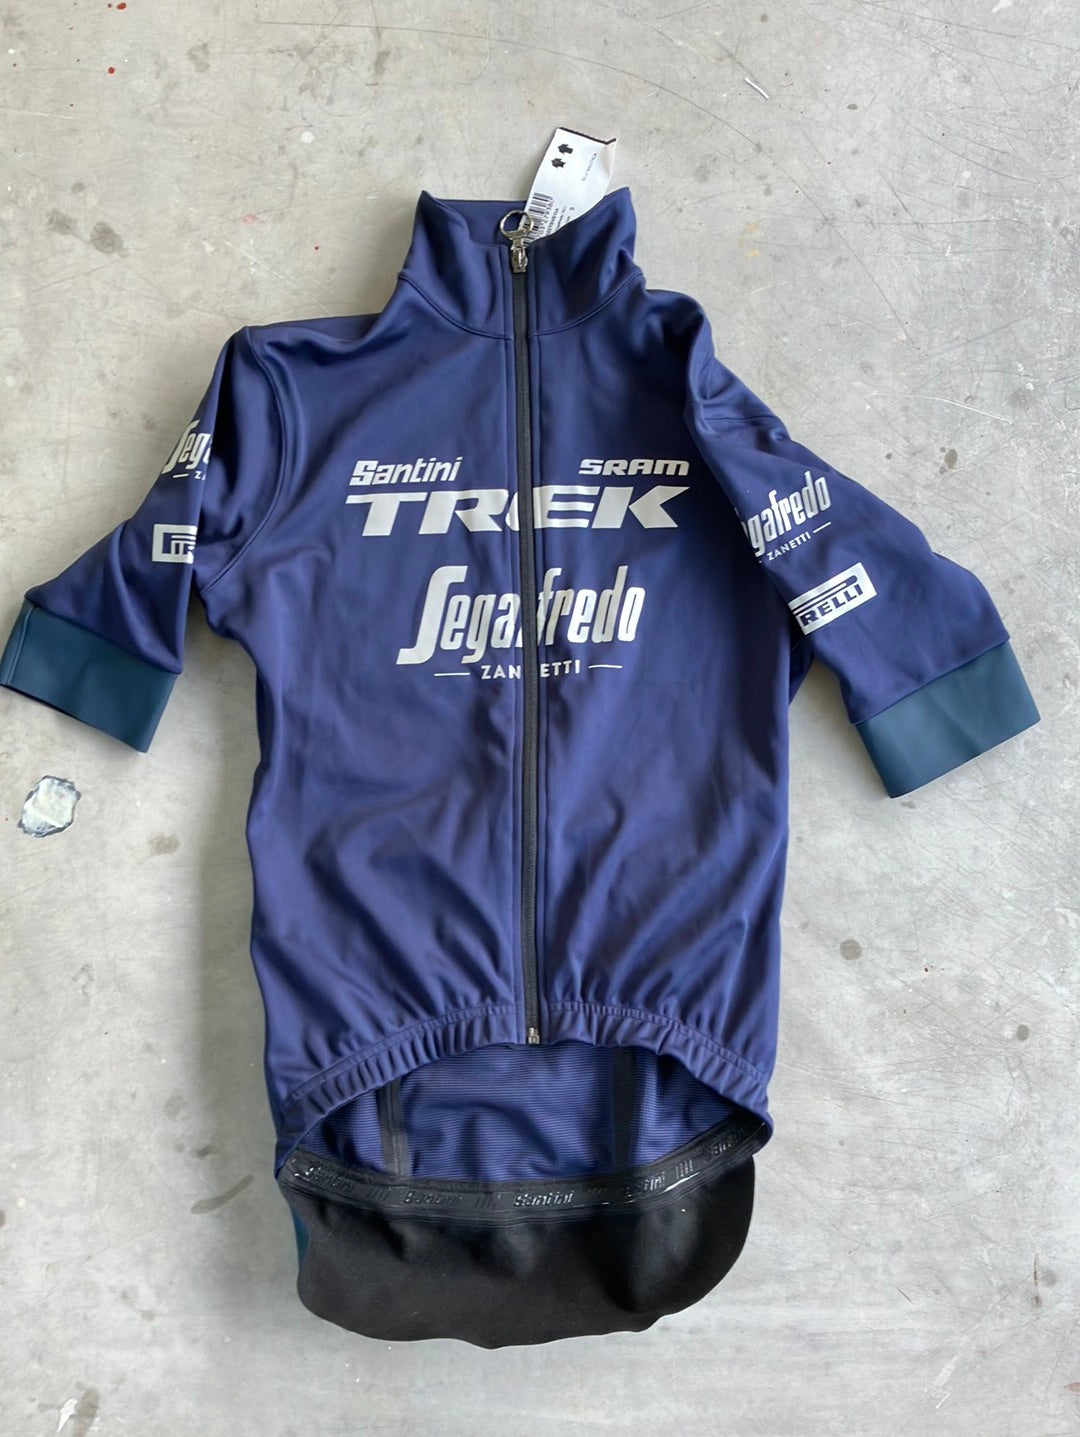 Trek Segafredo | Santini Short Sleeve Gabba Jacket | Navy | S | Pro-Issued Team Kit